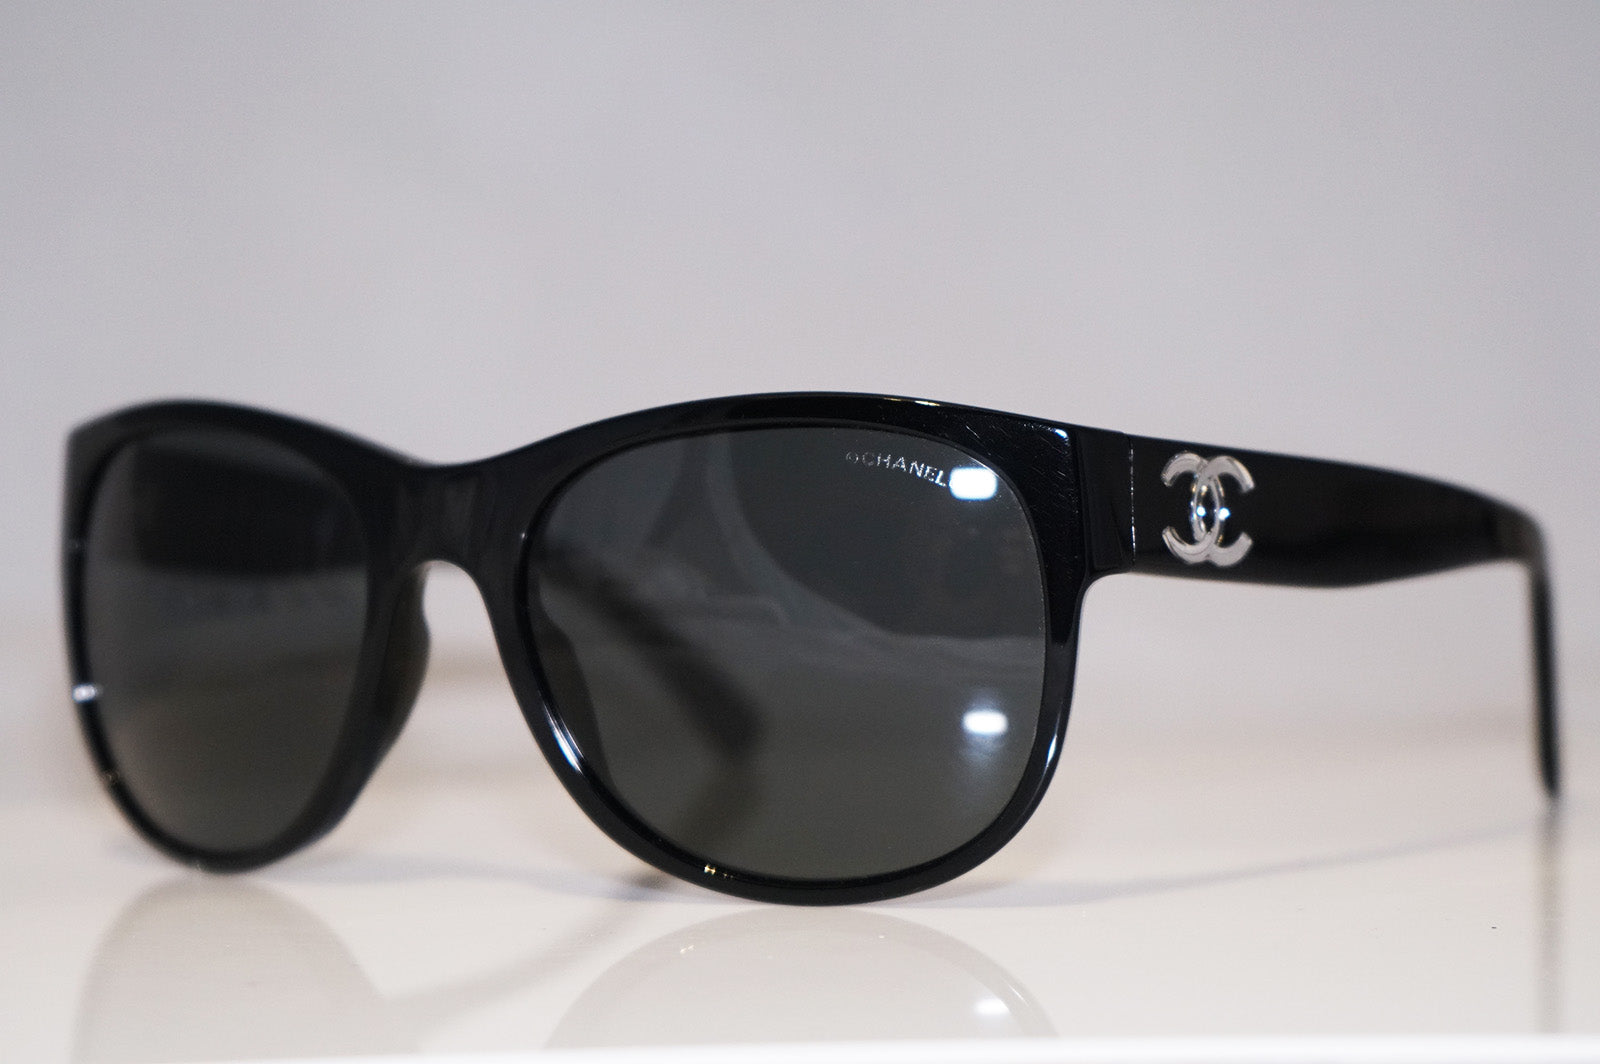 CHANEL Womens Designer Sunglasses Black Butterfly 5182 C501 3F 13873 –  SunglassBlog